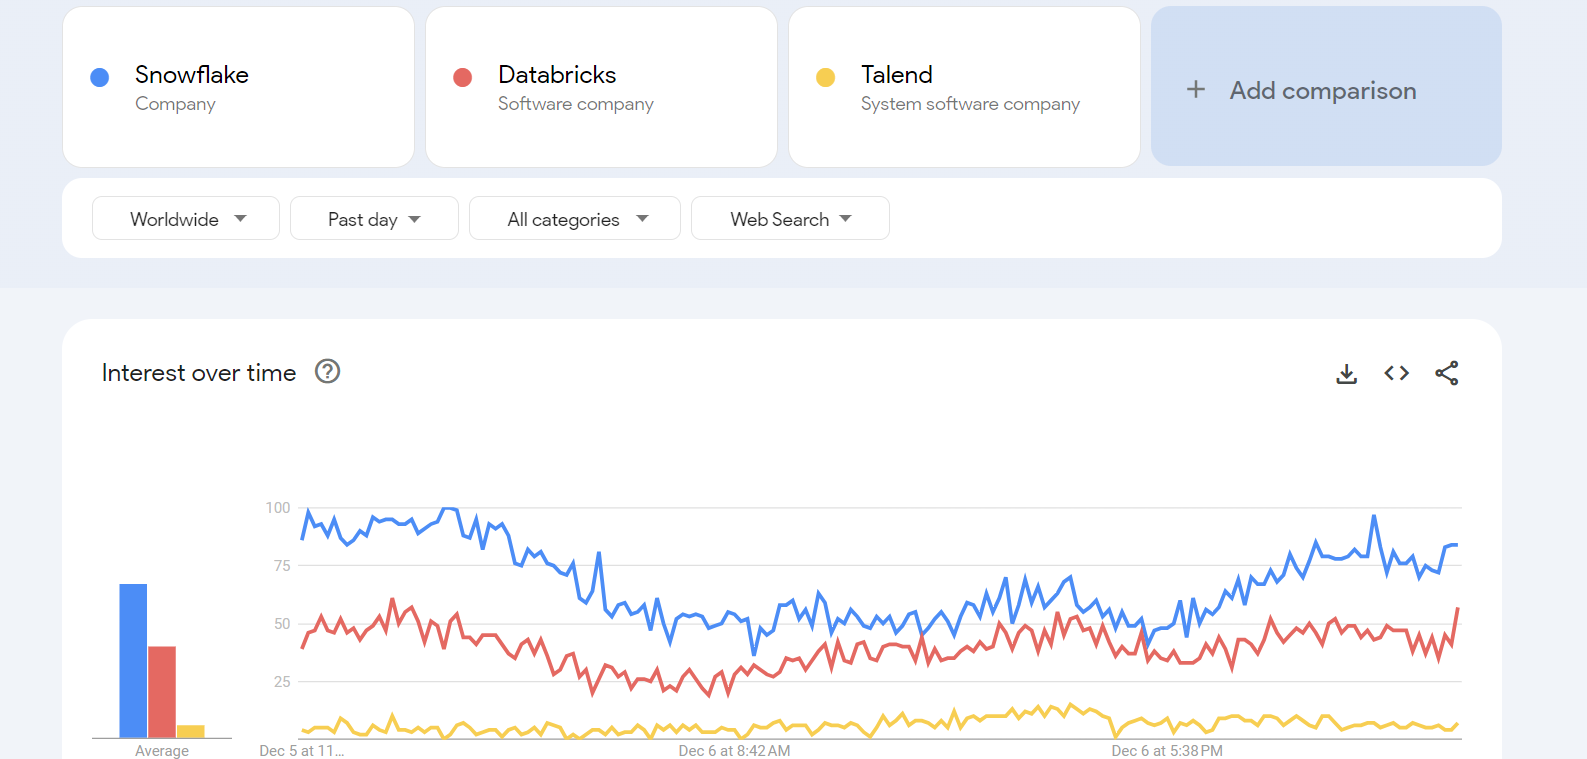 Google Trends for Databricks vs snowflake vs Talend